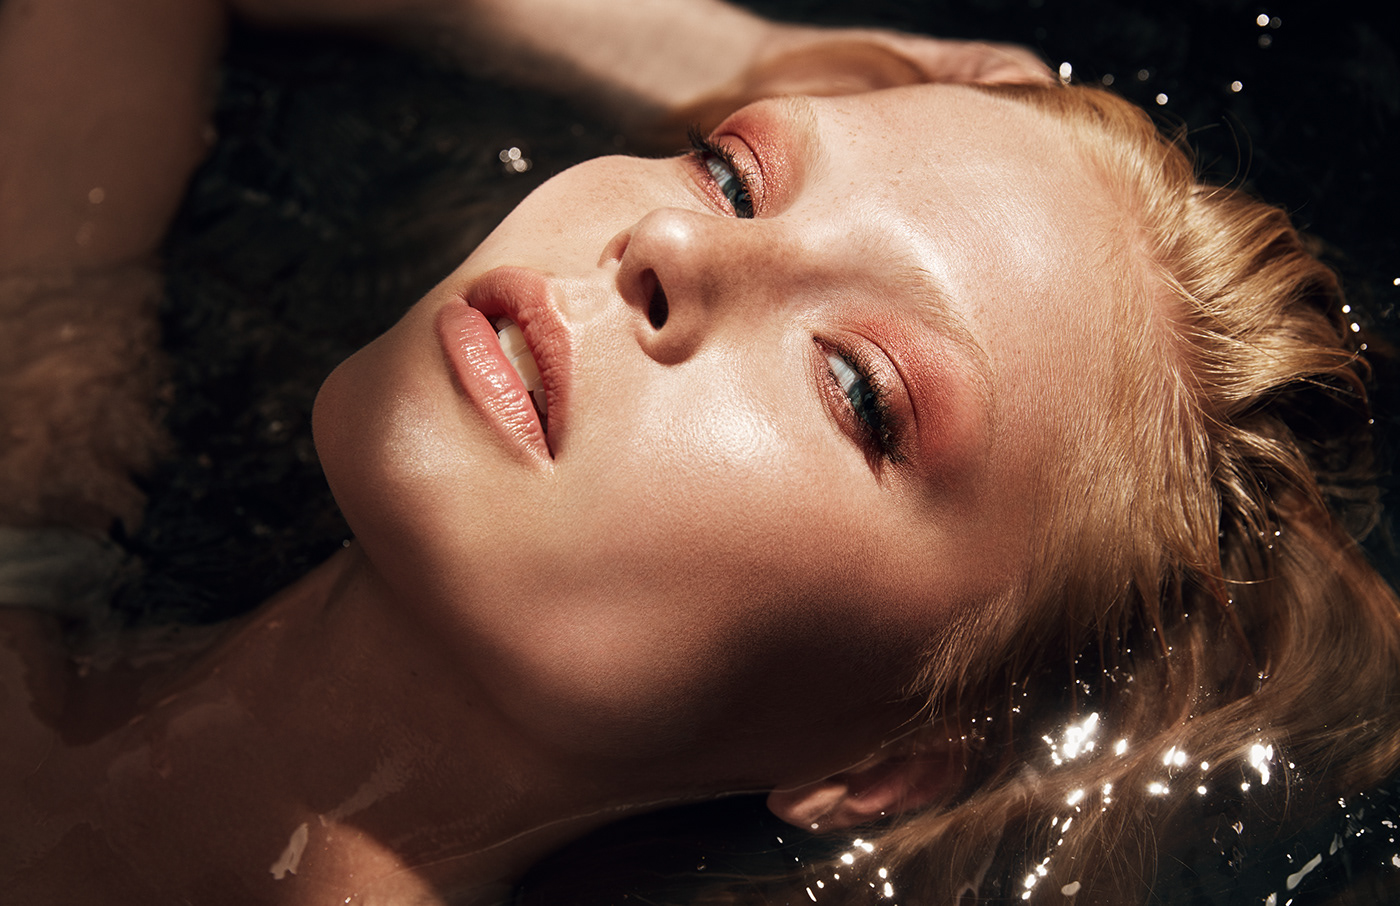 beauty BeautyPhotographer beautyphotography close-up fasionphotographer portrait topmodel water waterportrait